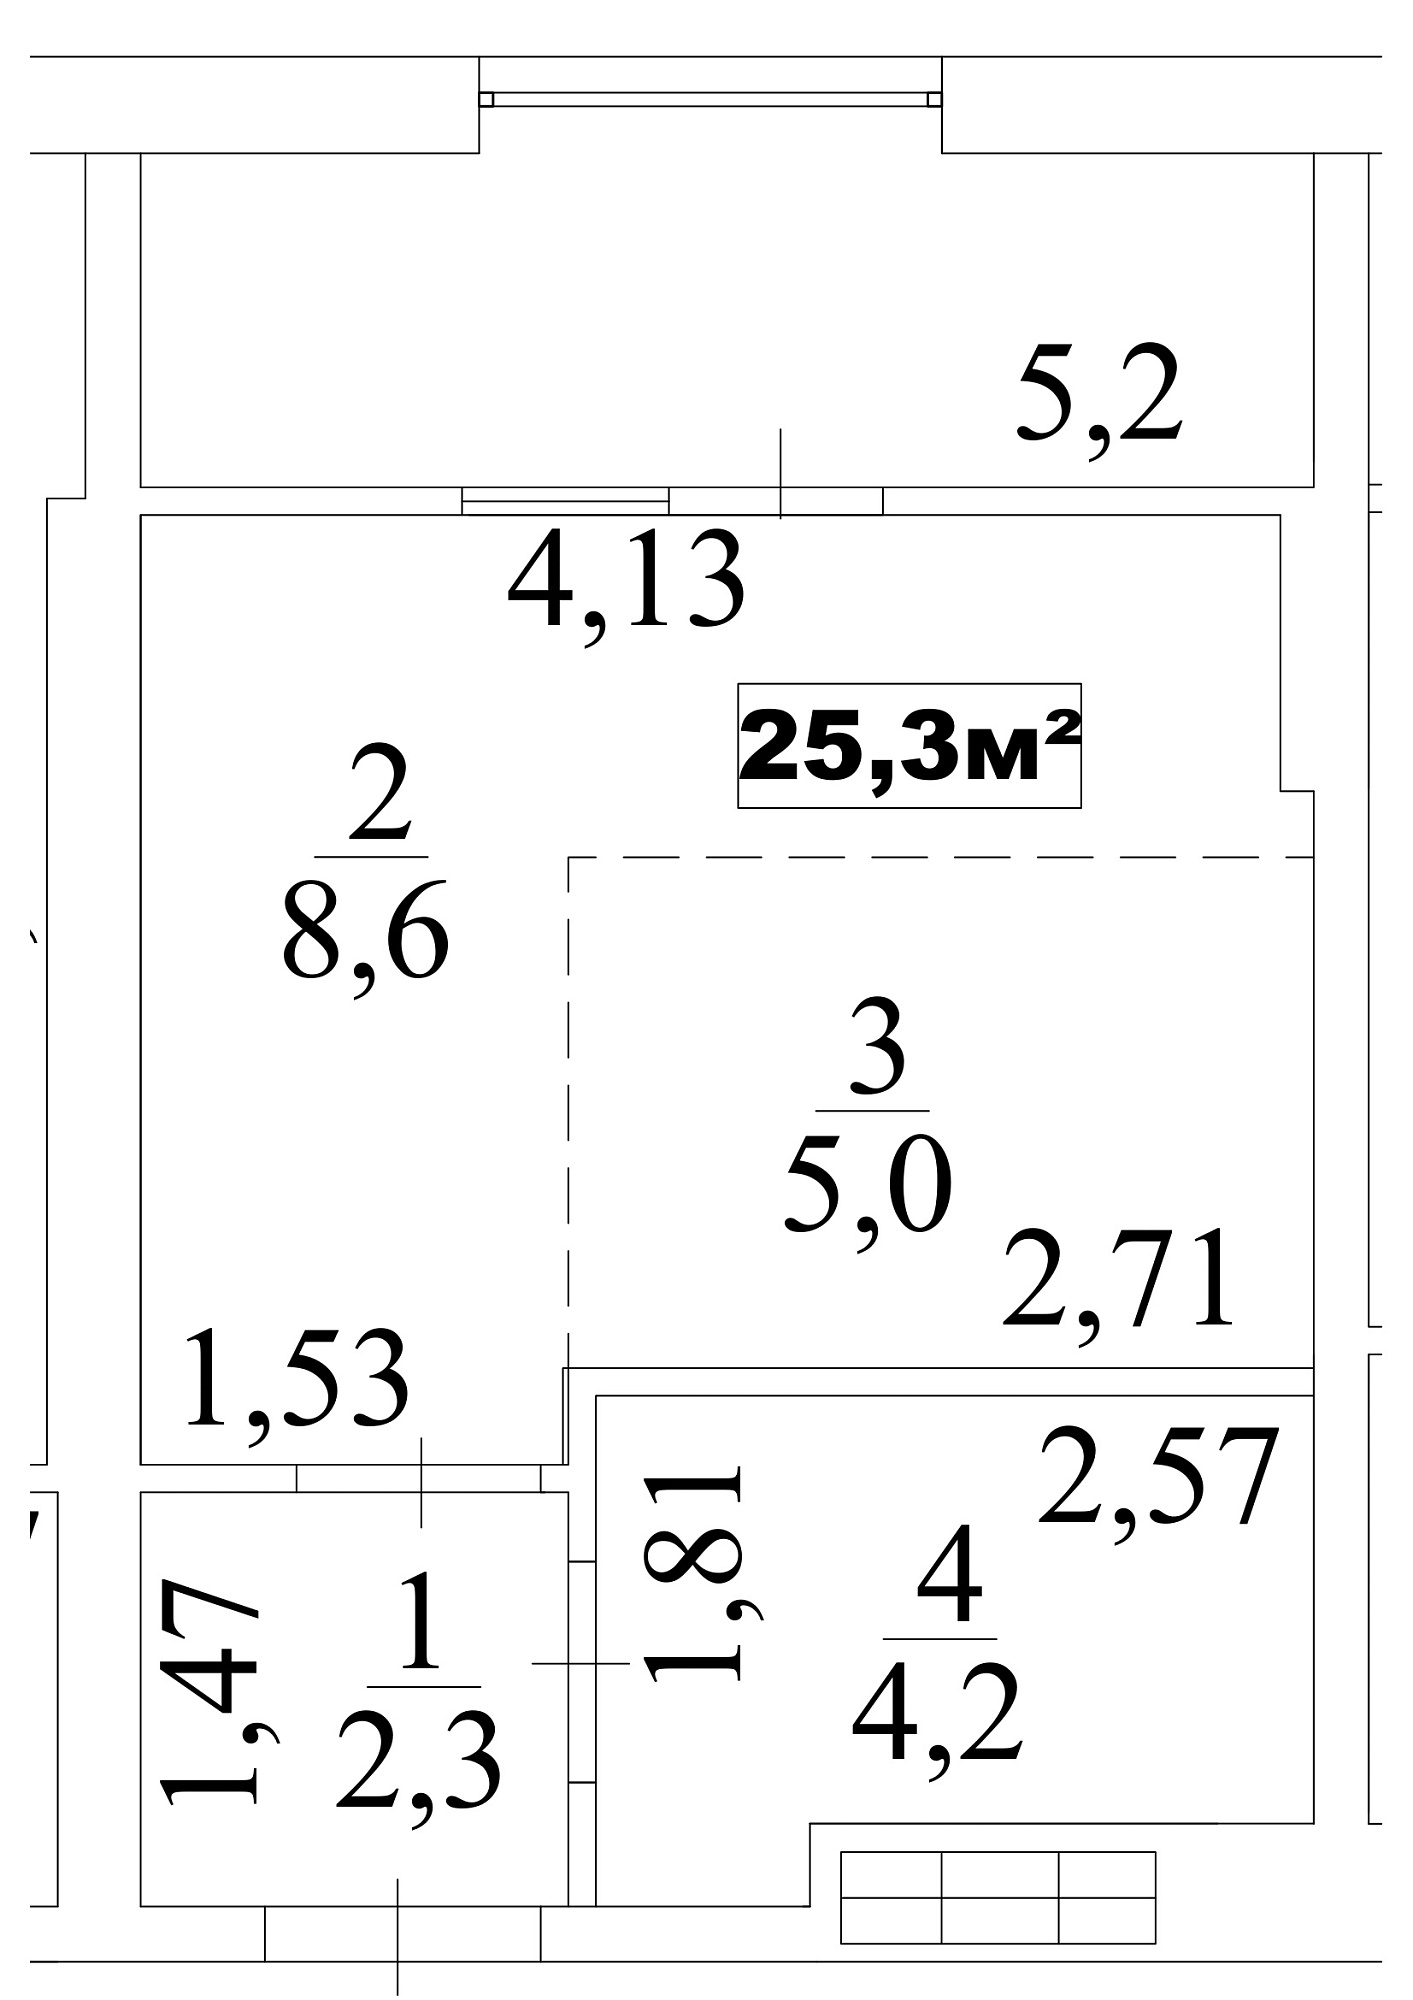 Planning Smart flats area 25.3m2, AB-10-03/0021в.